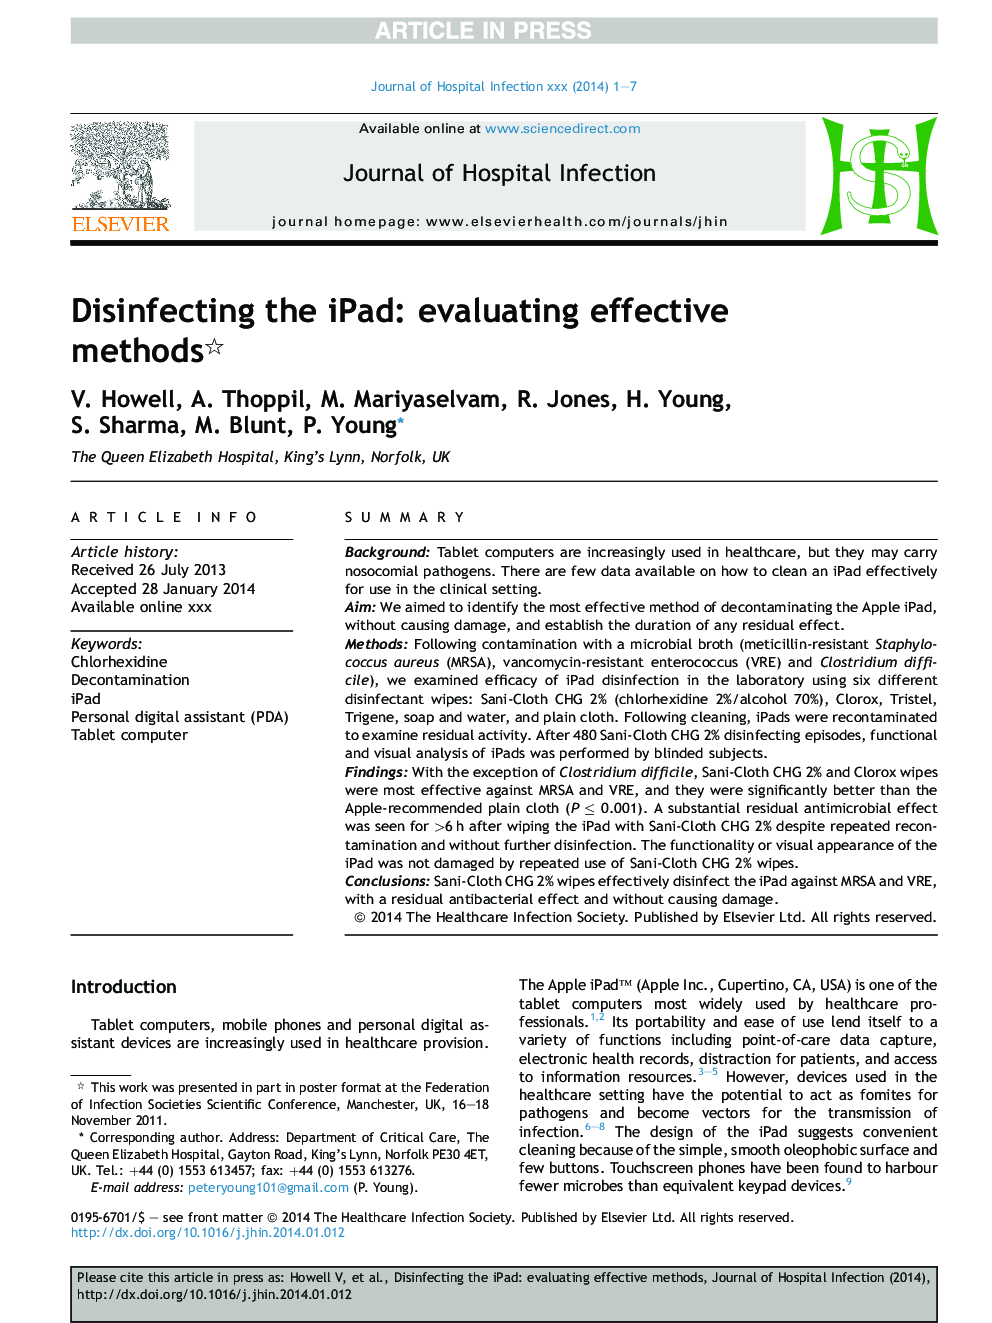 Disinfecting the iPad: evaluating effective methods